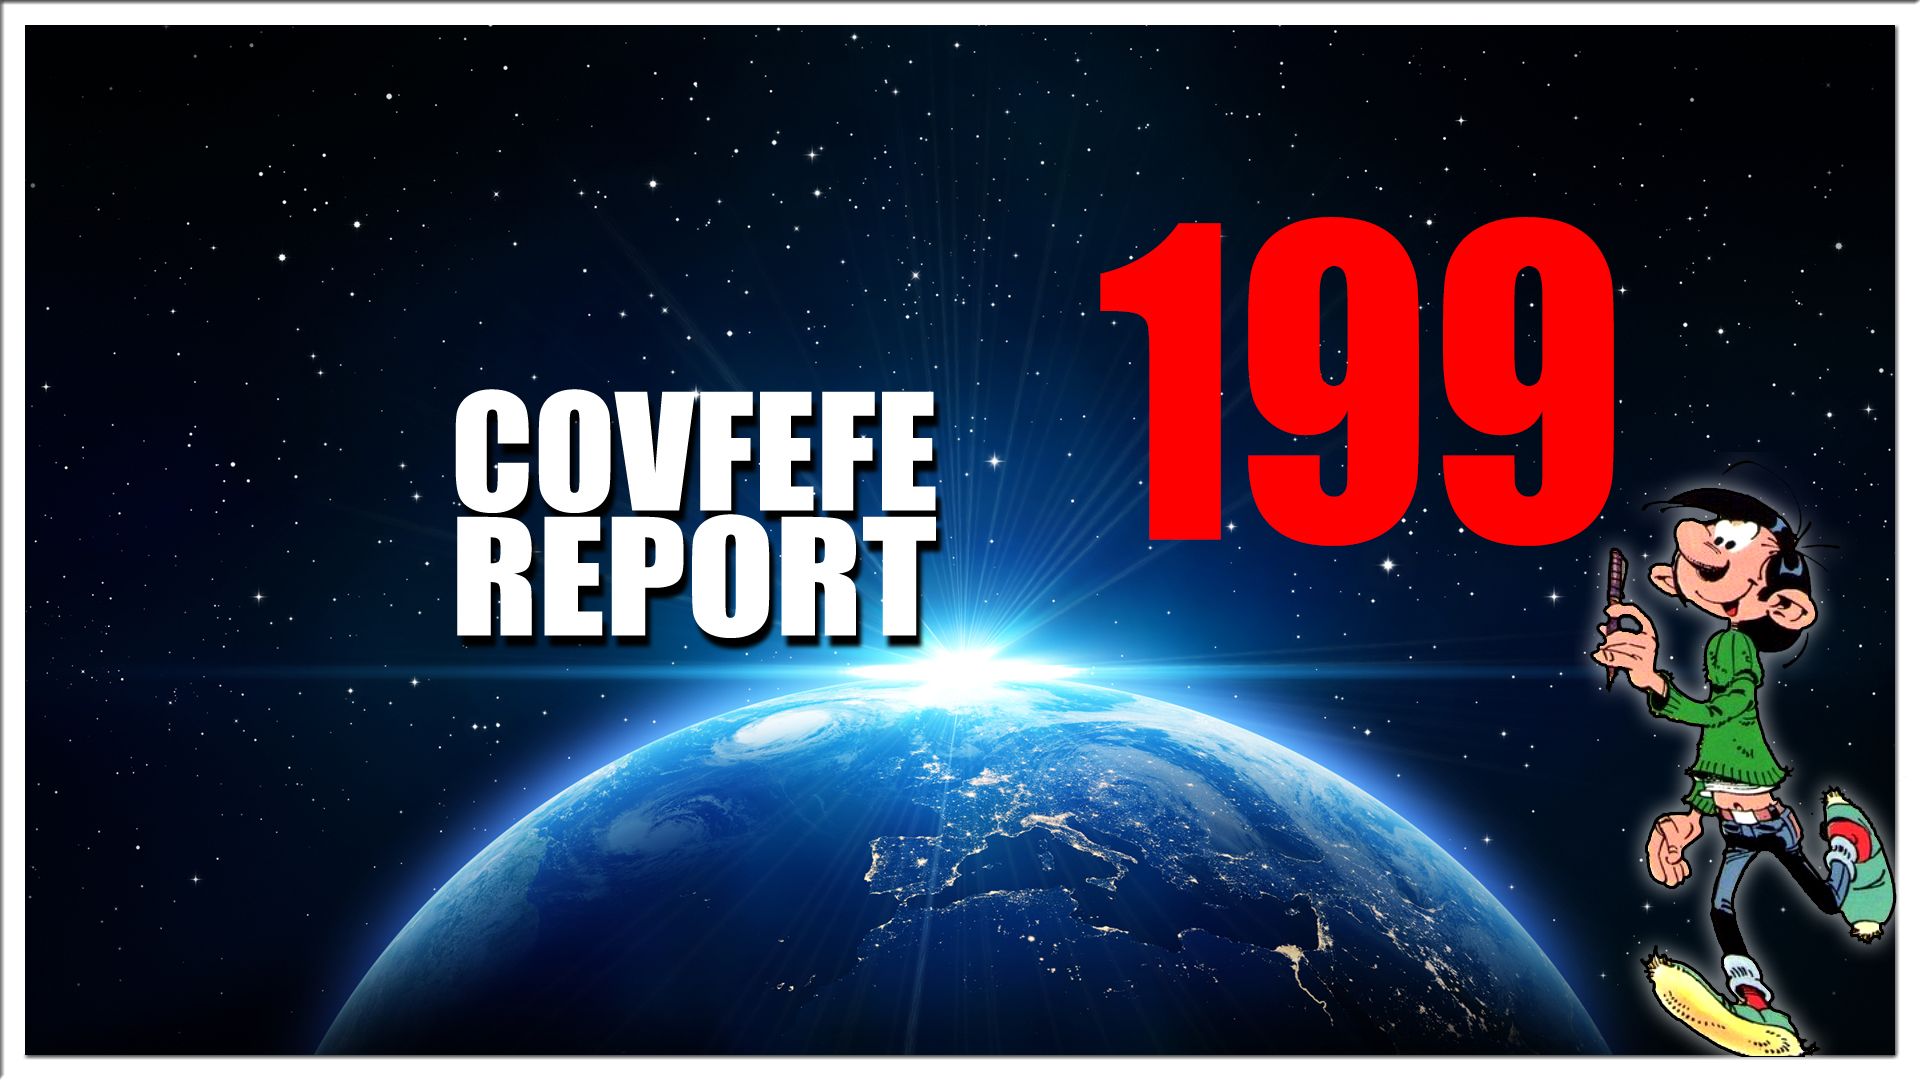 Covfefe Report 199. ngt